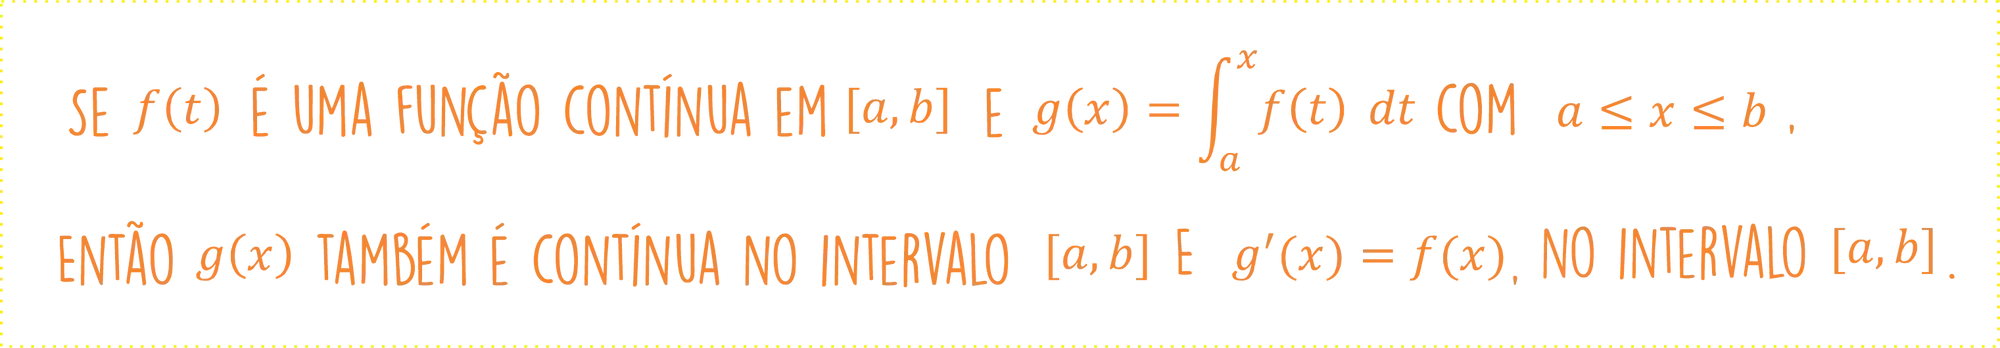 Teorema Fundamental do Cálculo: Parte 1